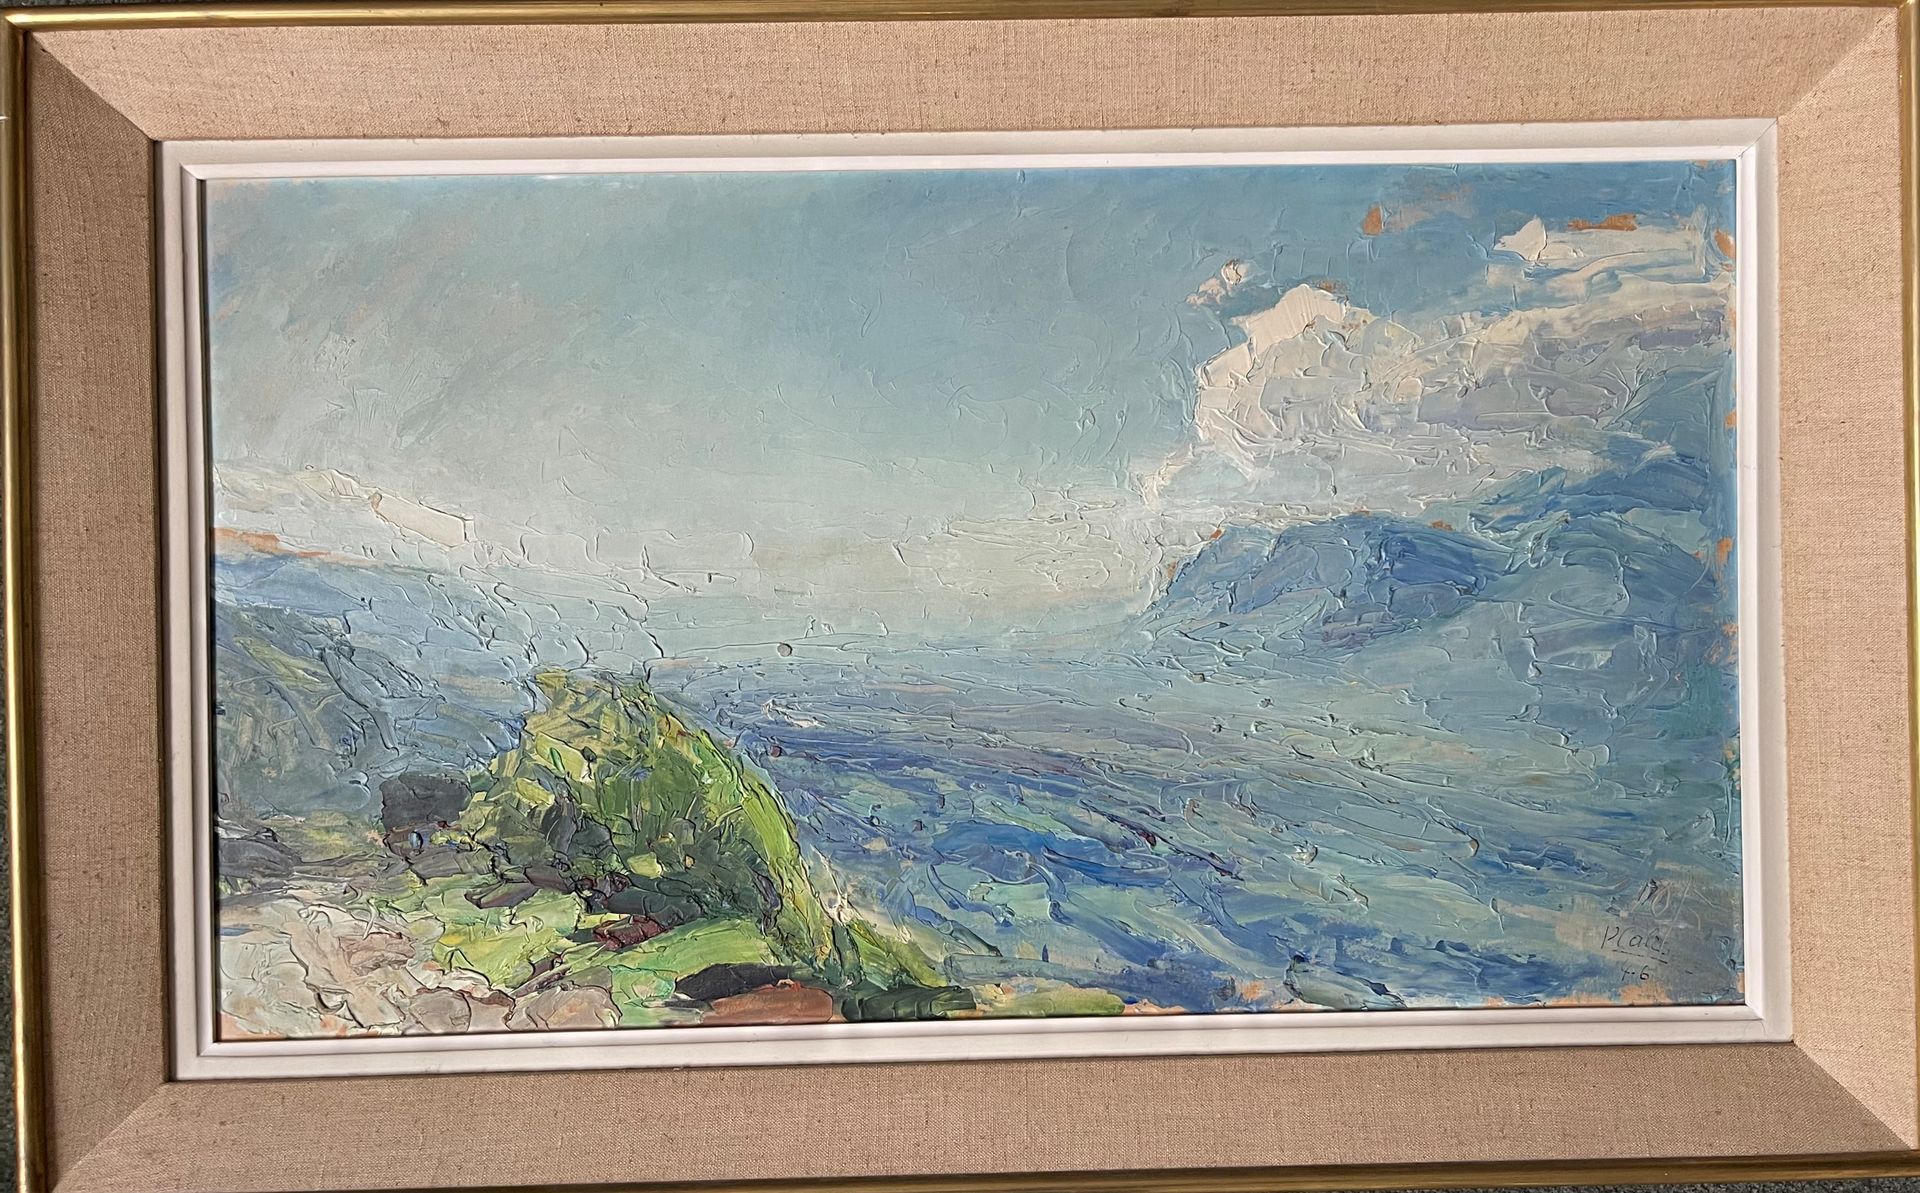 Null 皮埃尔-卡莱斯 (1870-1961)

格雷西瓦丹》，1946年。

油画，右下方有签名，日期为 "10.3.46"。

40 x 69厘米。